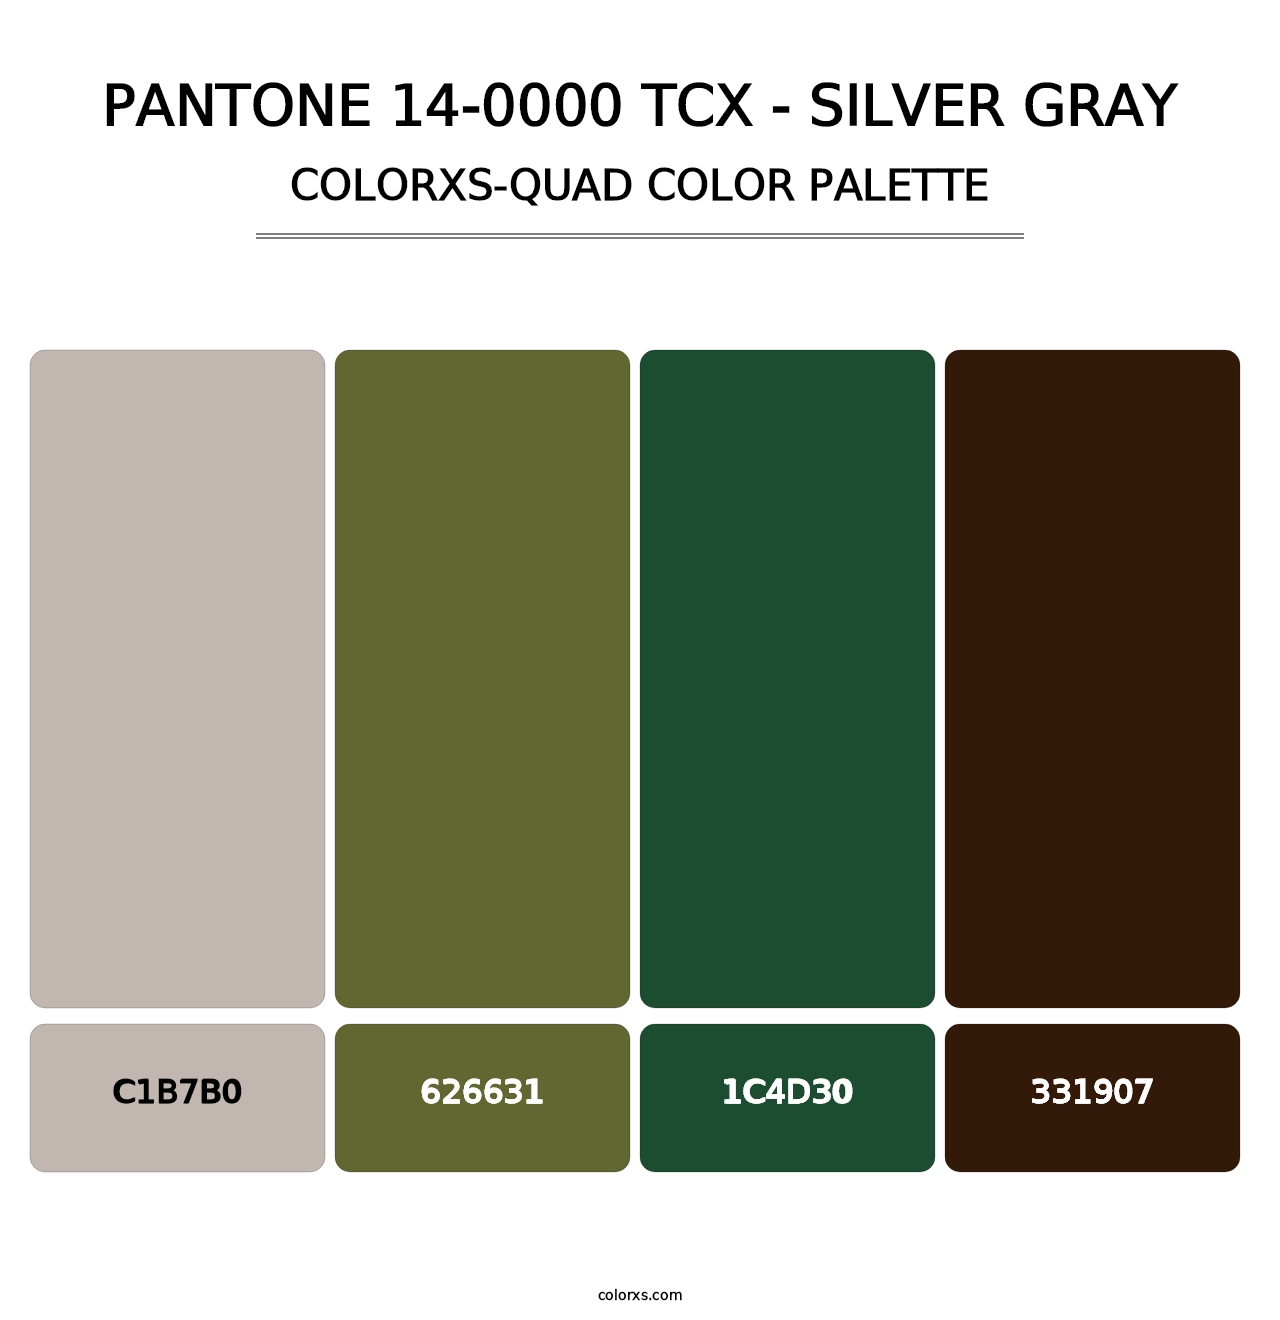 PANTONE 14-0000 TCX - Silver Gray - Colorxs Quad Palette